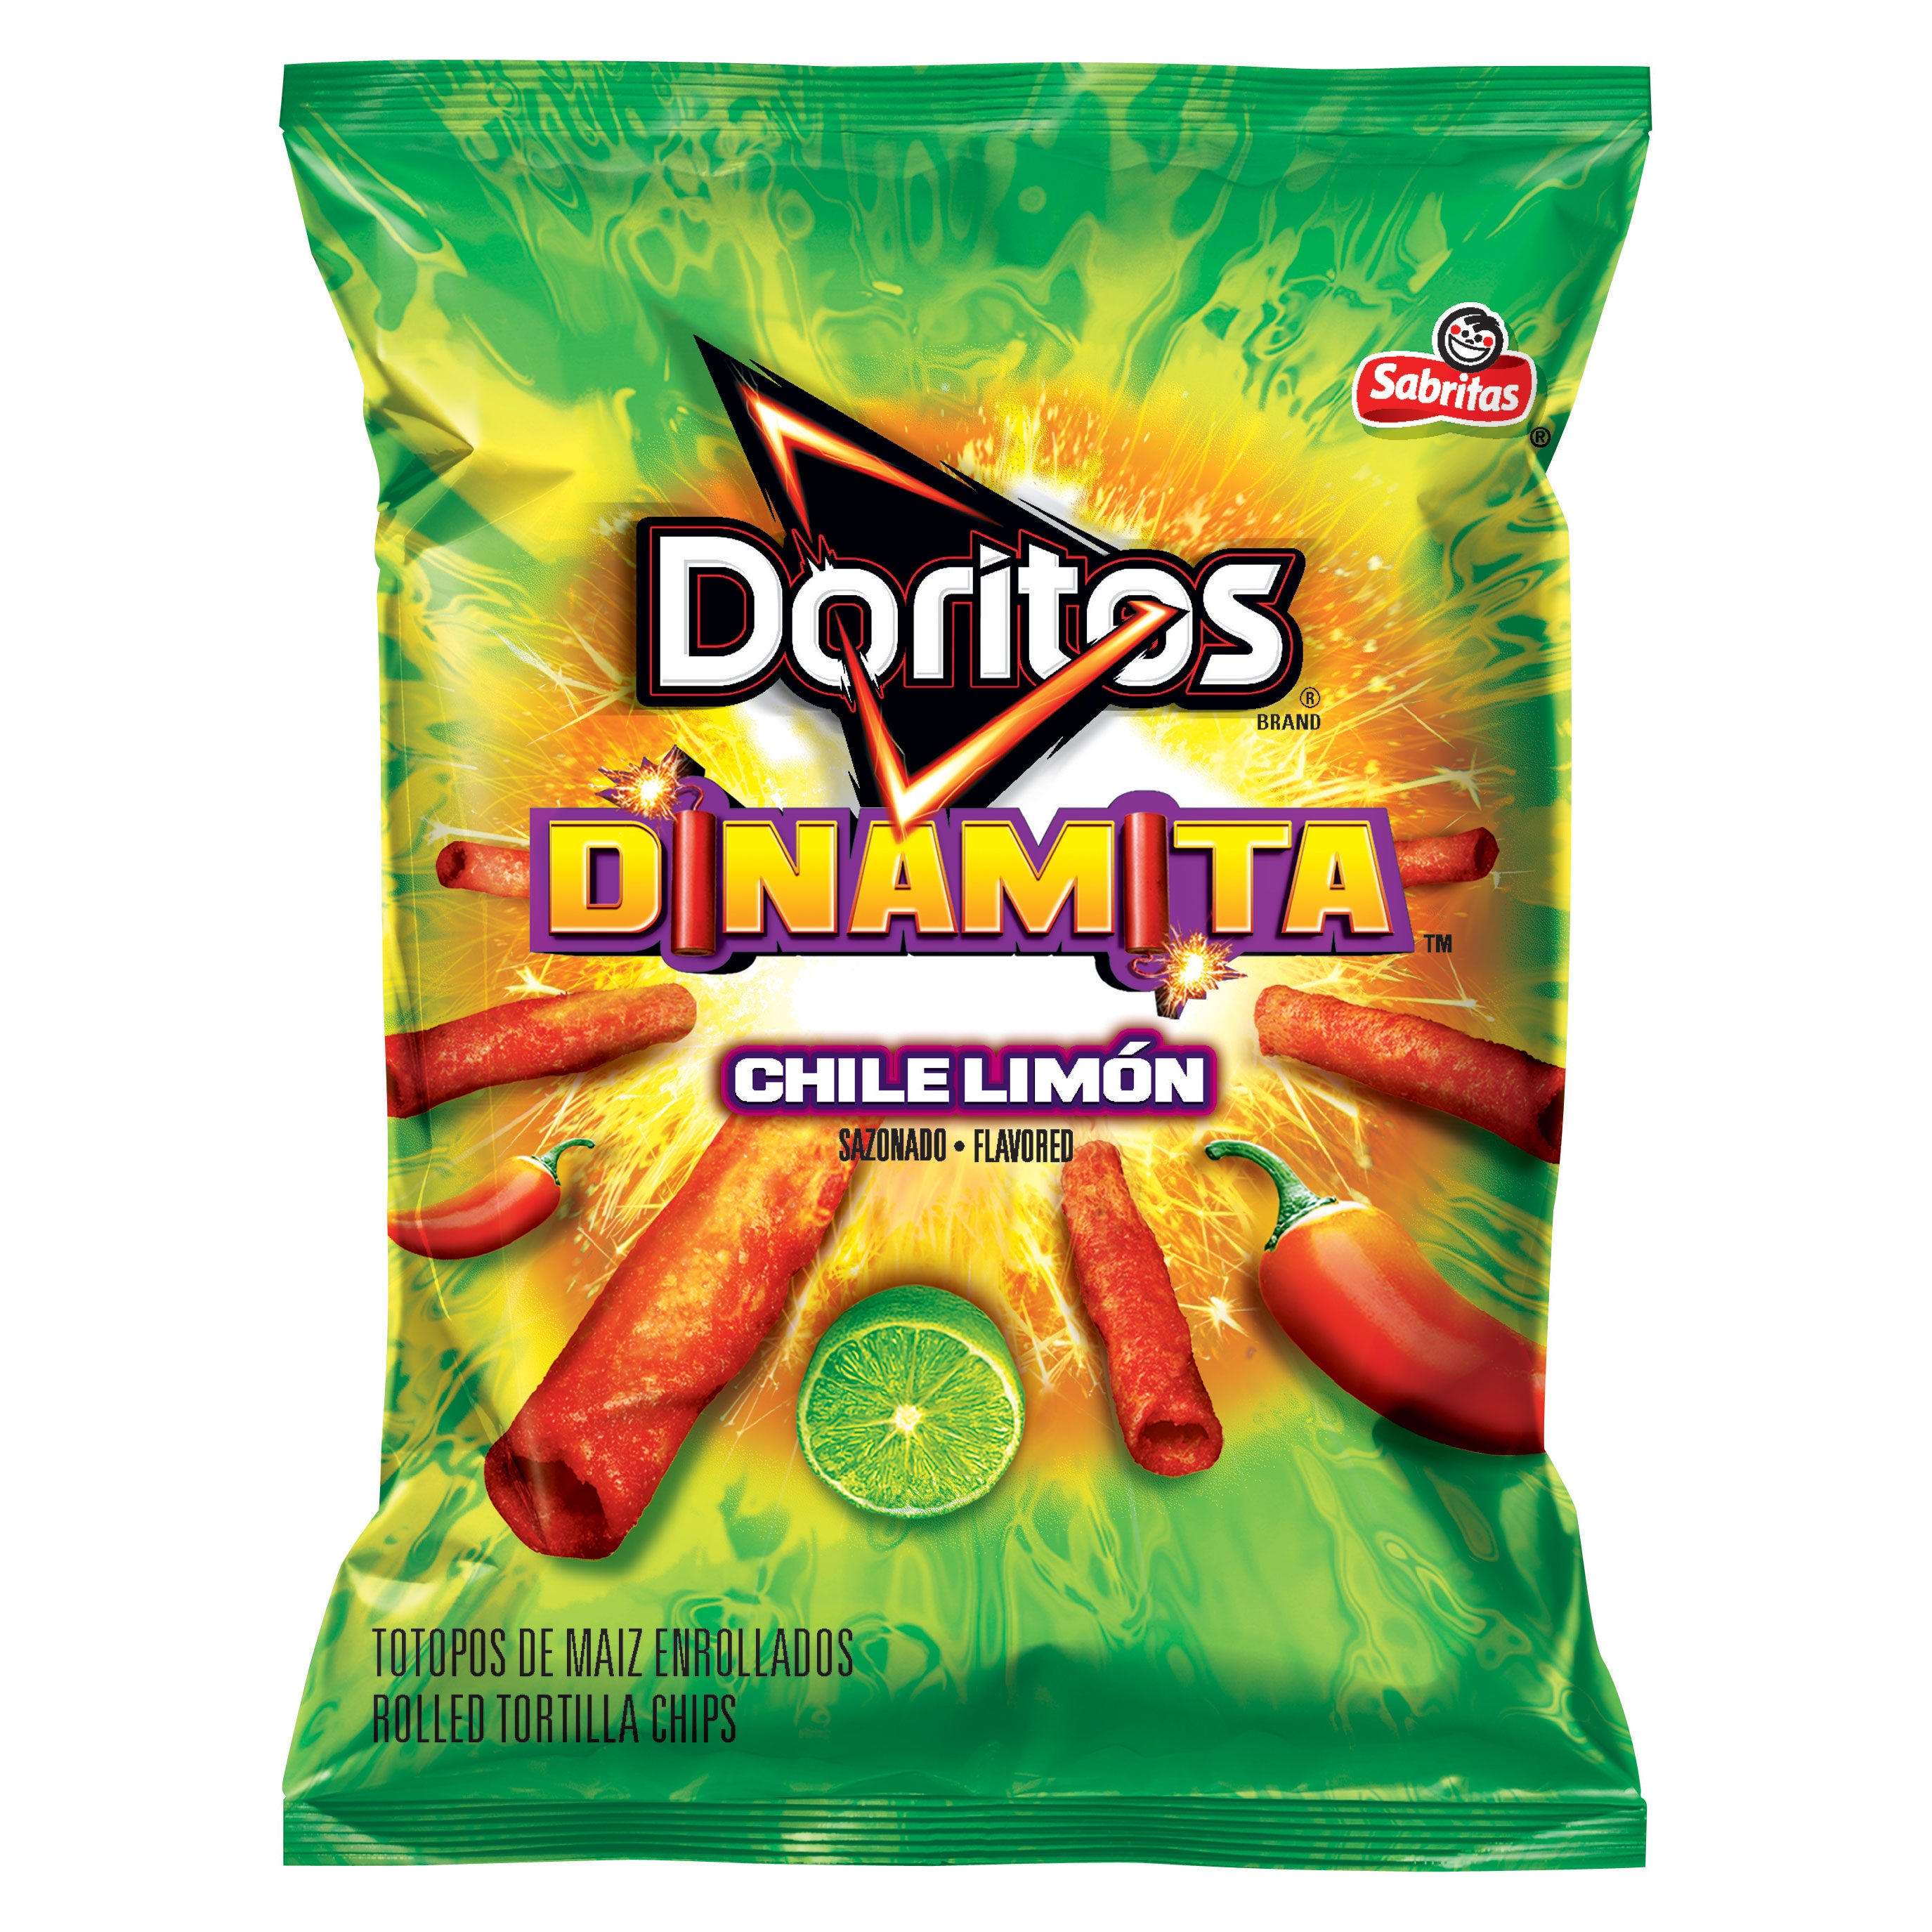 Doritos Dinamita Chile Limon Flavored 